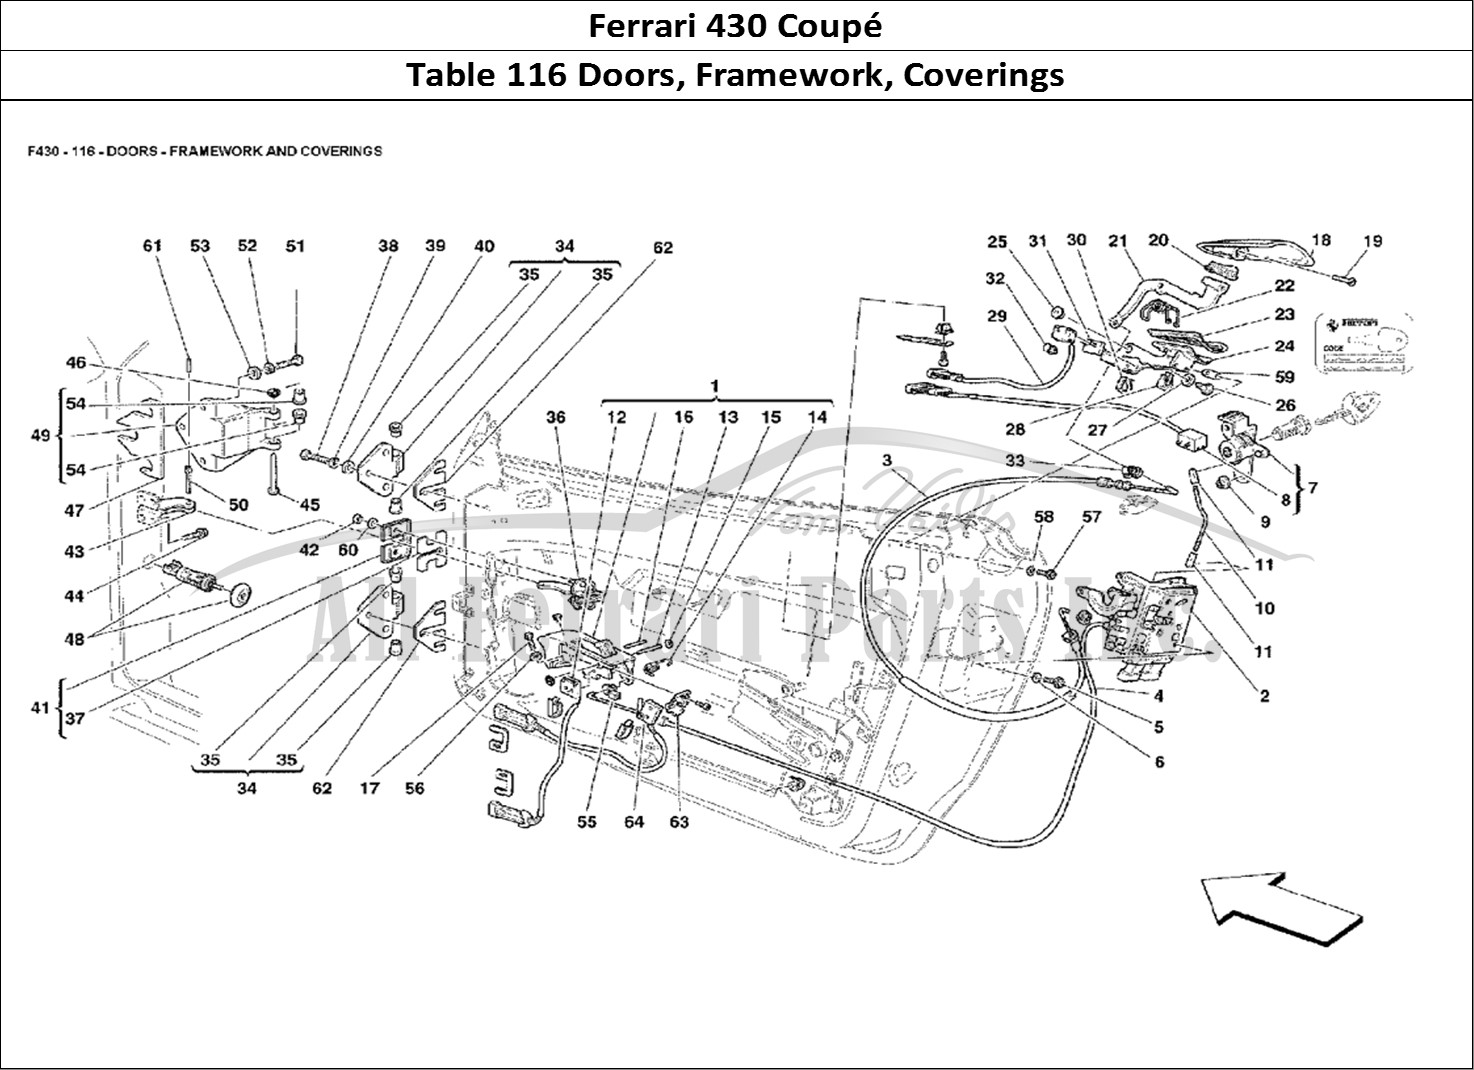 Ferrari Parts Ferrari 430 Coup Page 116 Doors - Framework and Cov